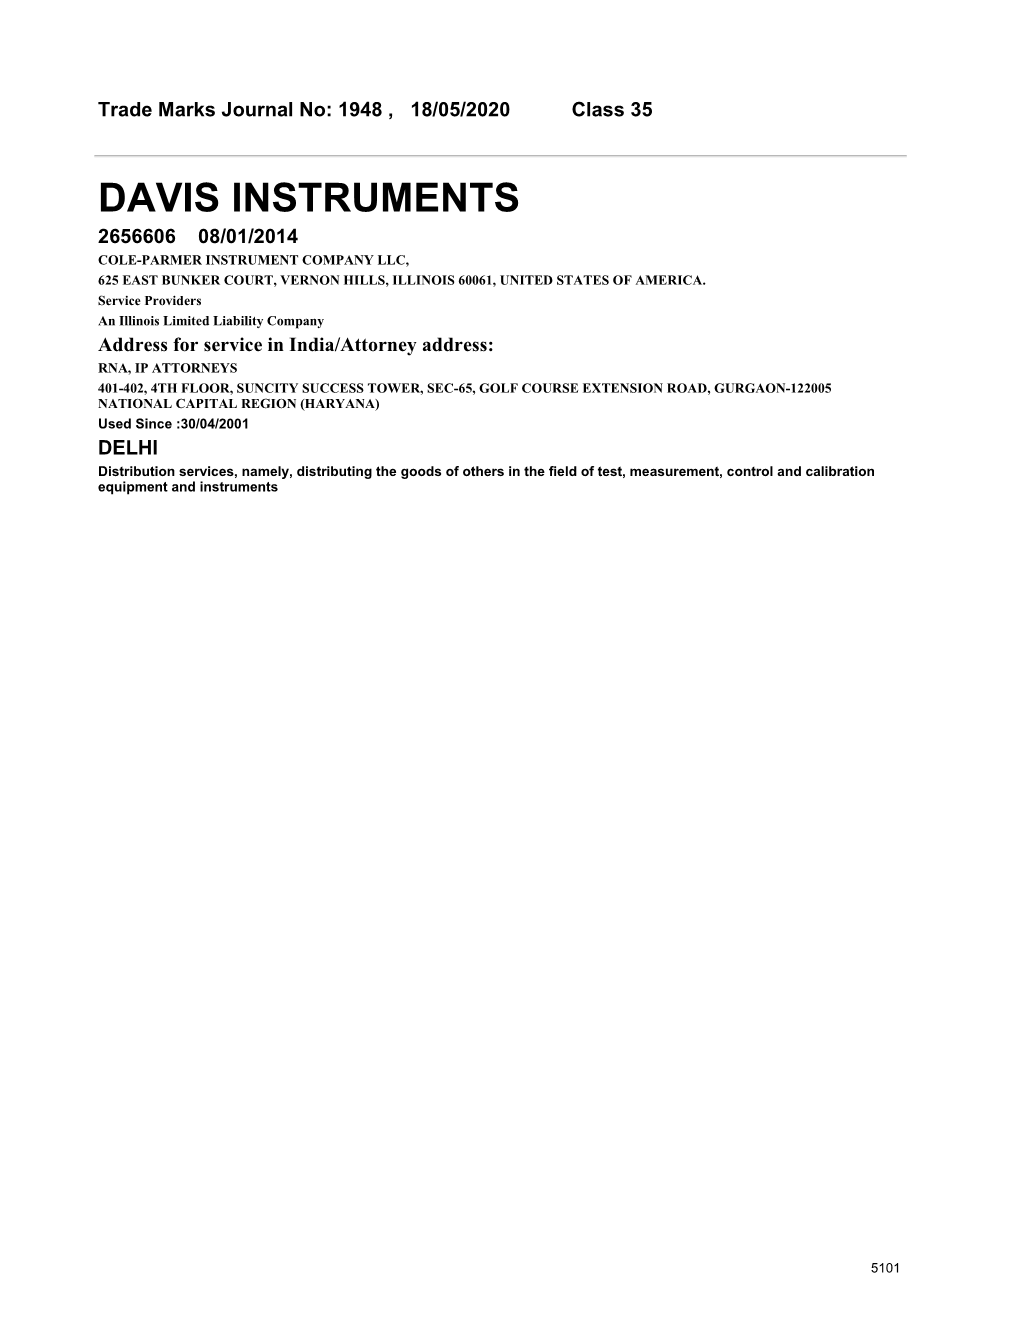 Davis Instruments 2656606 08/01/2014 Cole-Parmer Instrument Company Llc, 625 East Bunker Court, Vernon Hills, Illinois 60061, United States of America